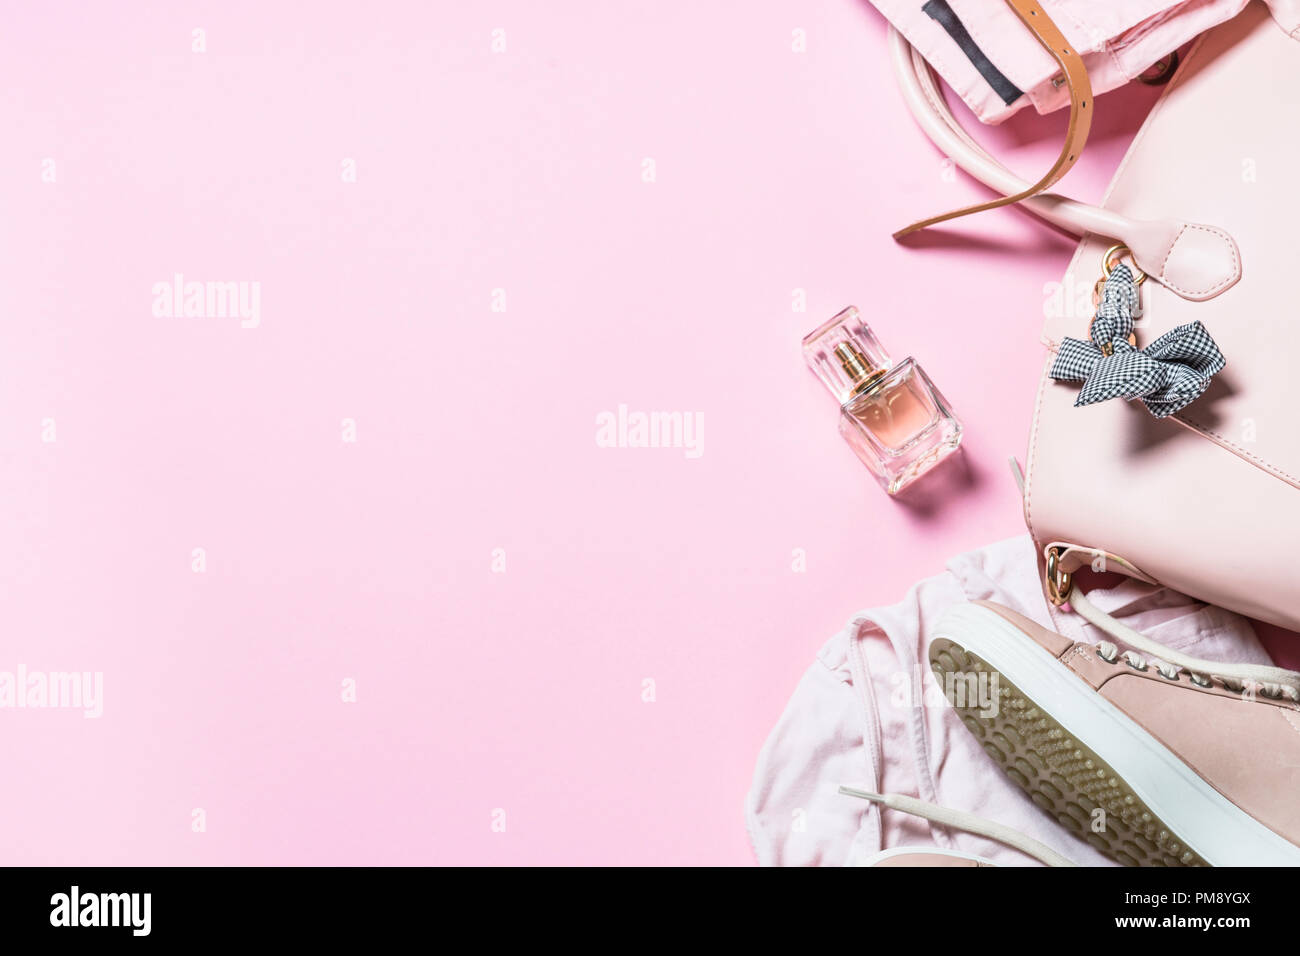 Frau Mode Accessoires rosa Schuhe, Handtaschen, Smartphone und pe Stockfoto